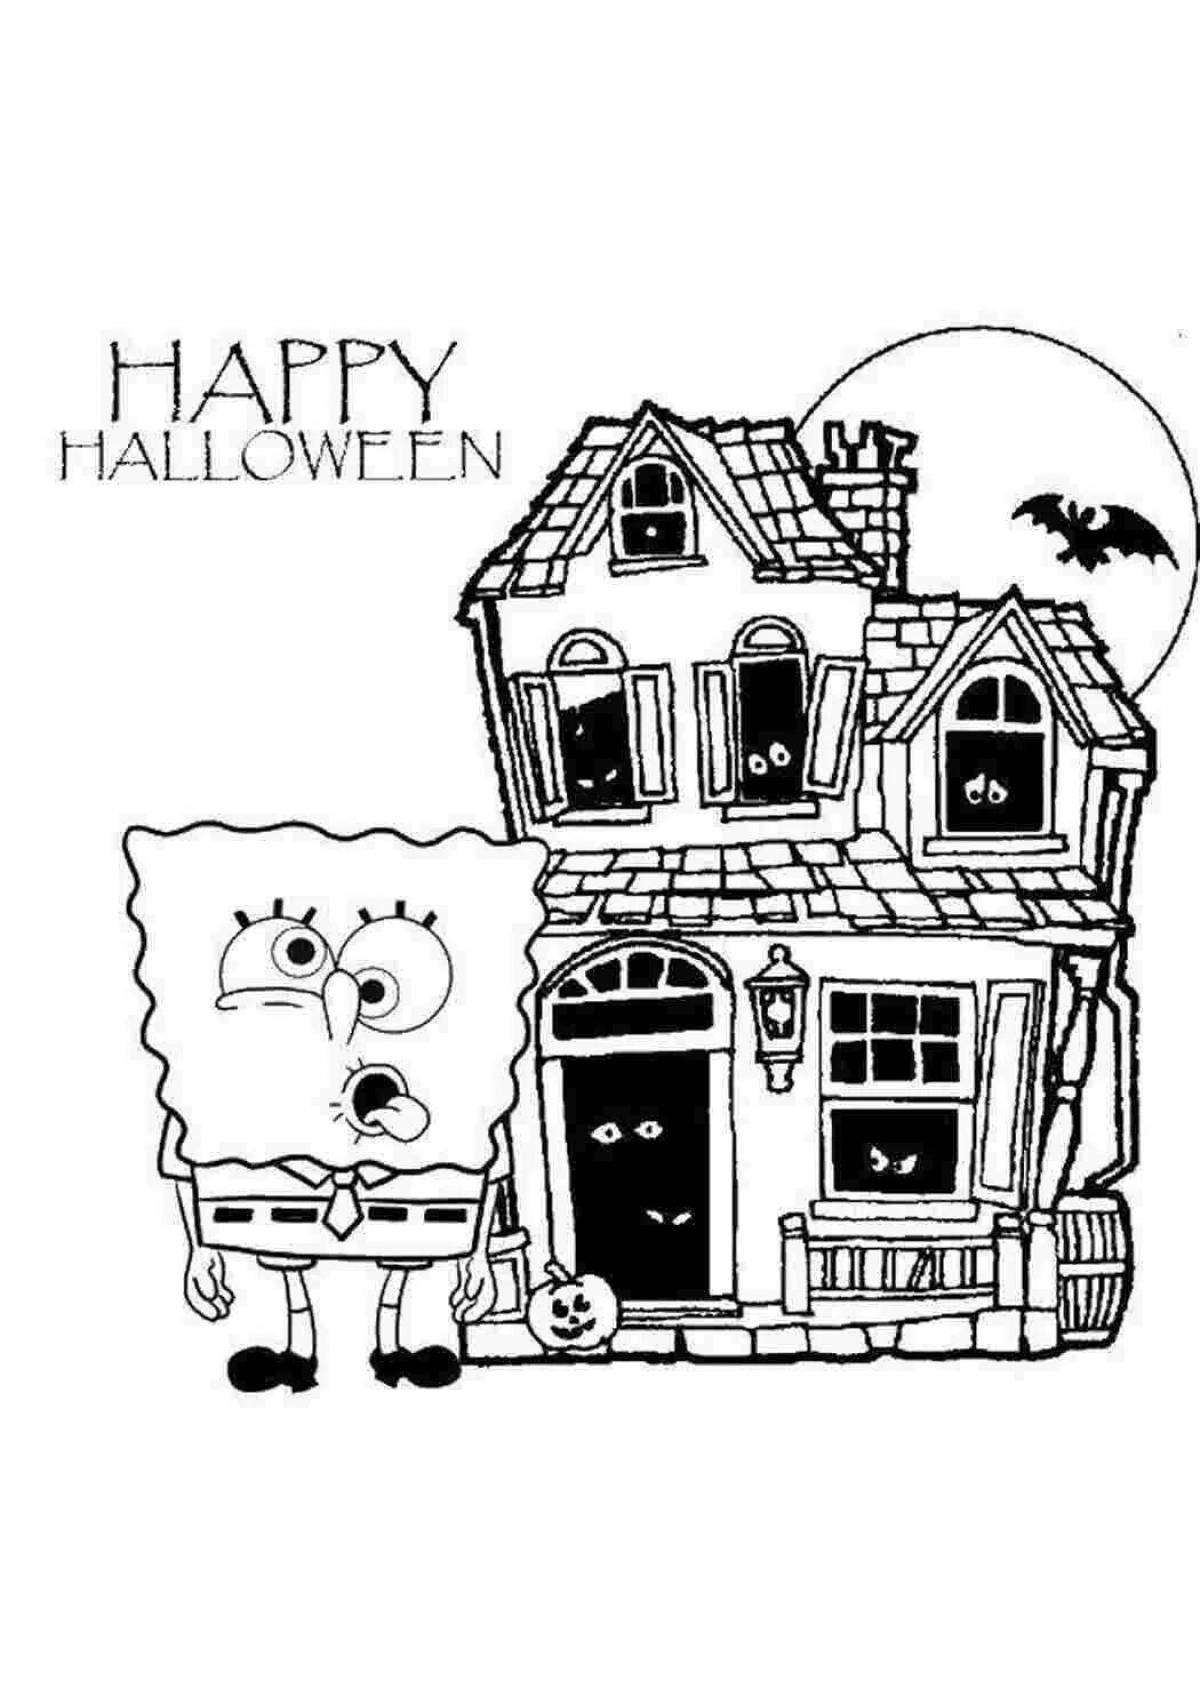 Spongebob's happy house coloring page